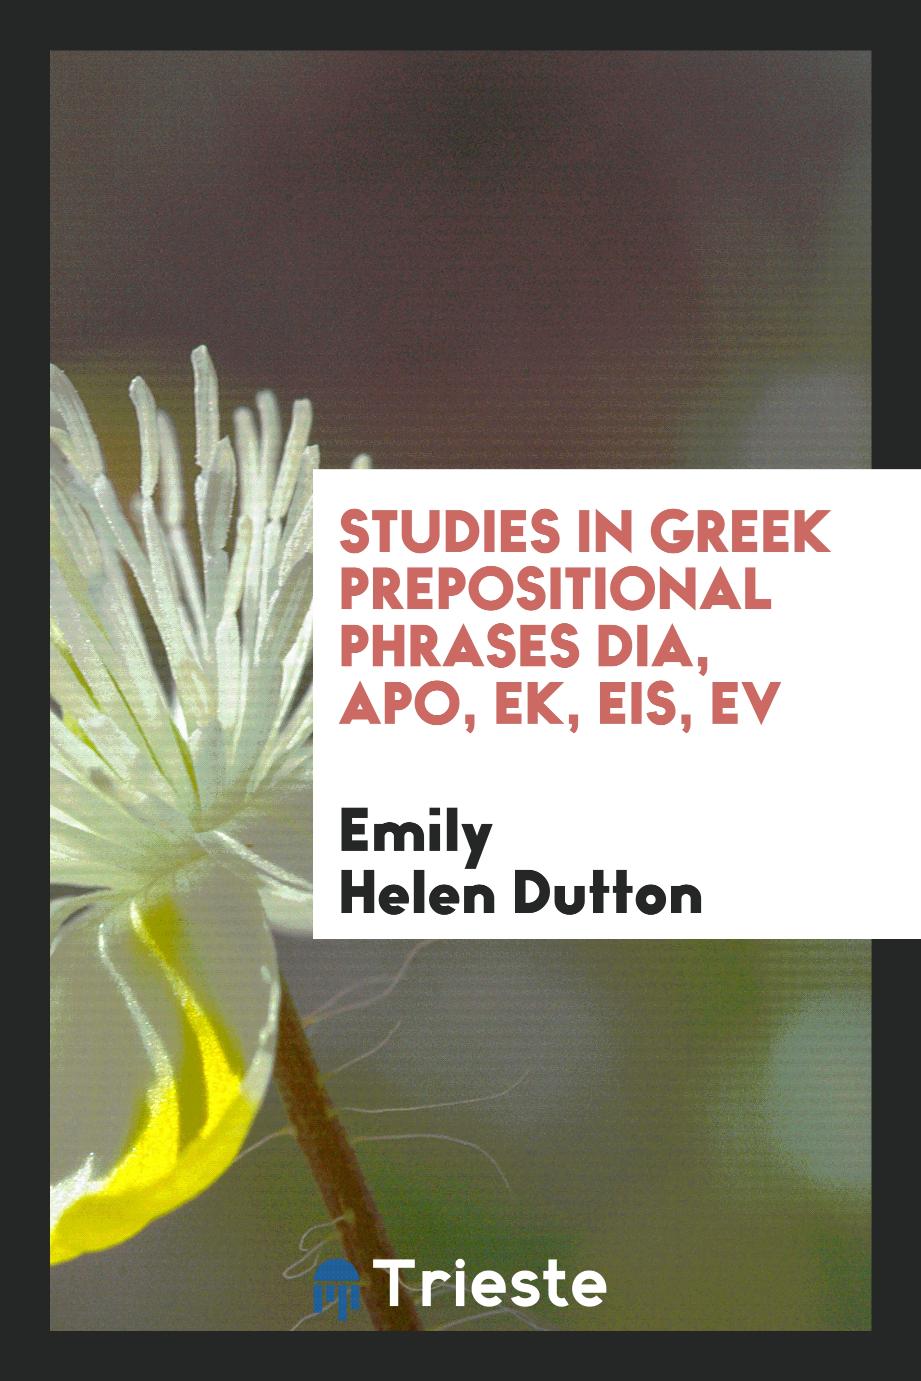 Studies in Greek prepositional phrases dia, apo, ek, eis, ev